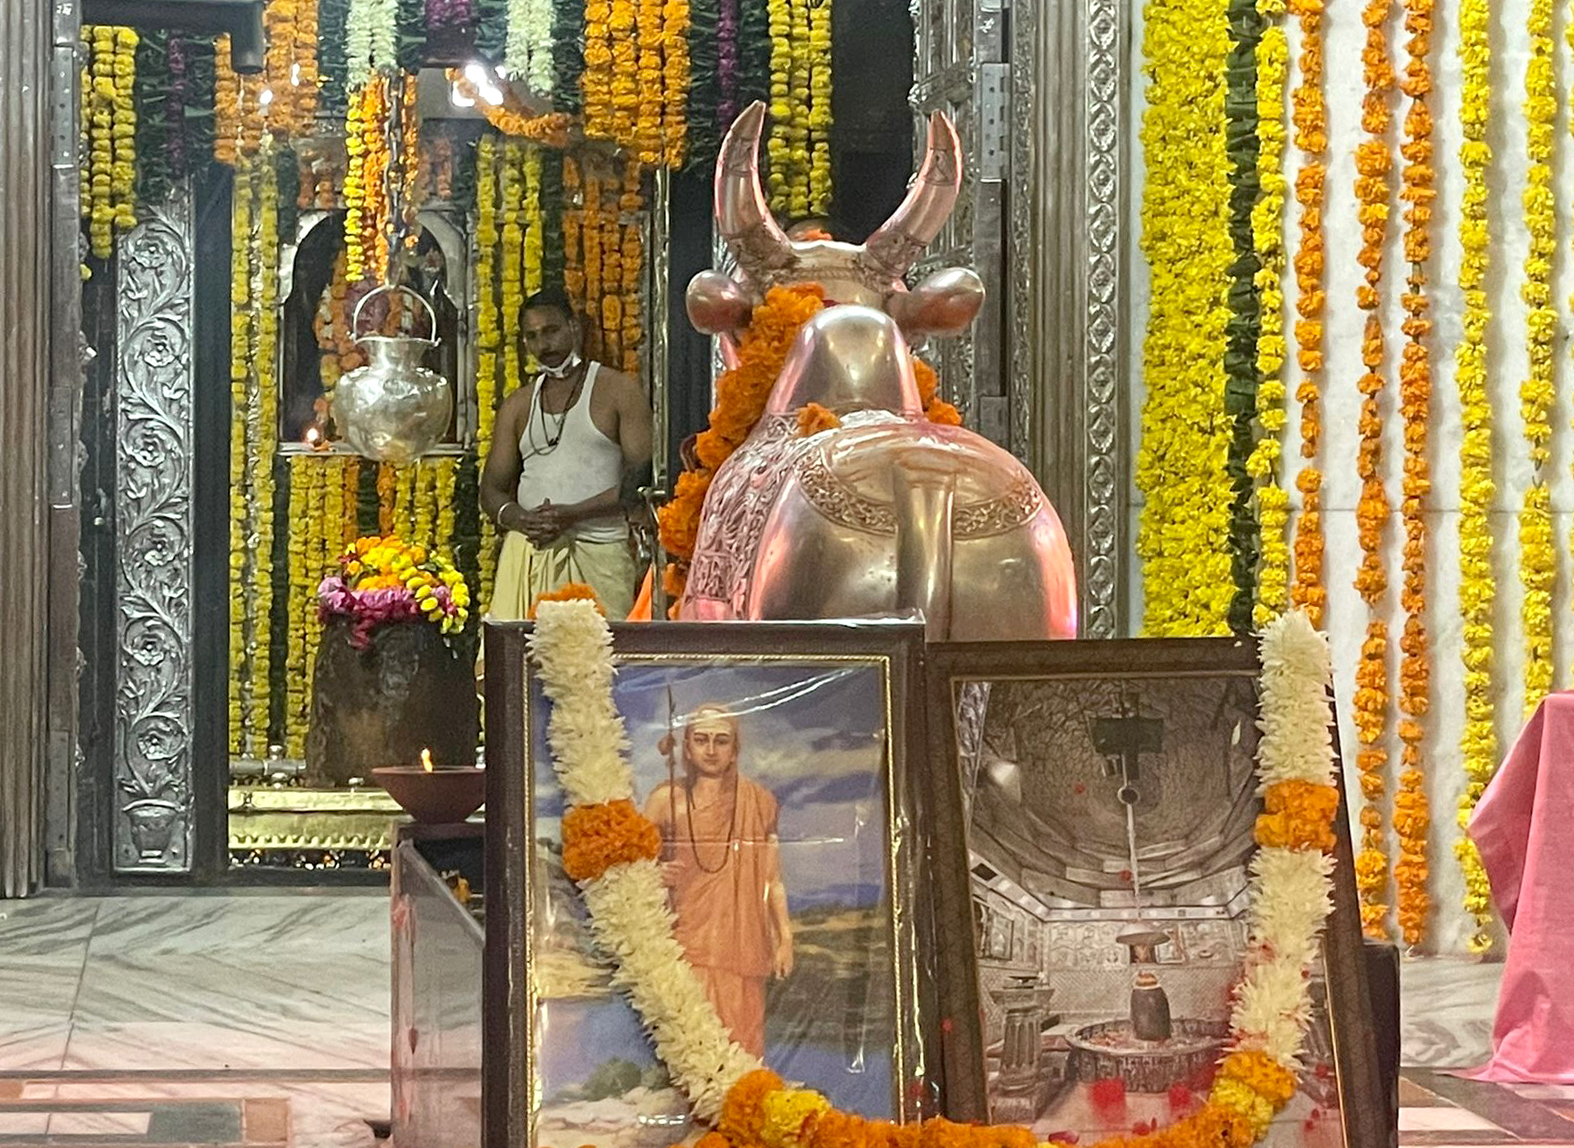 WWE wrestler Saurav Gurjar offers prayers at Mahakaleshwar temple in Ujjain, MP